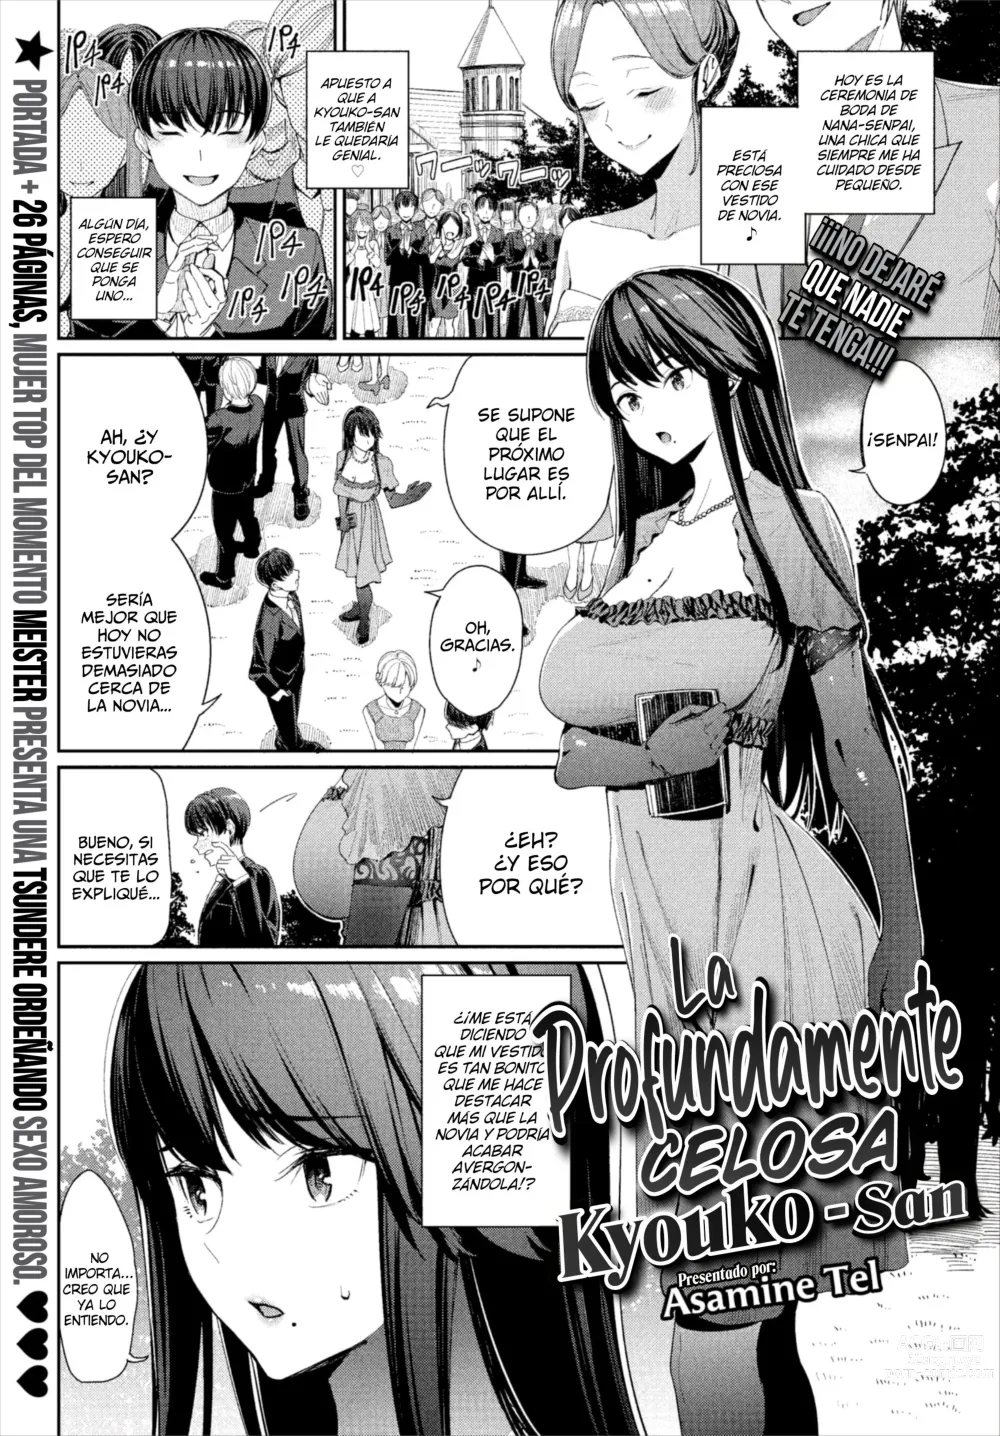 Page 2 of manga La Profundamente Celosa Kyouko-San